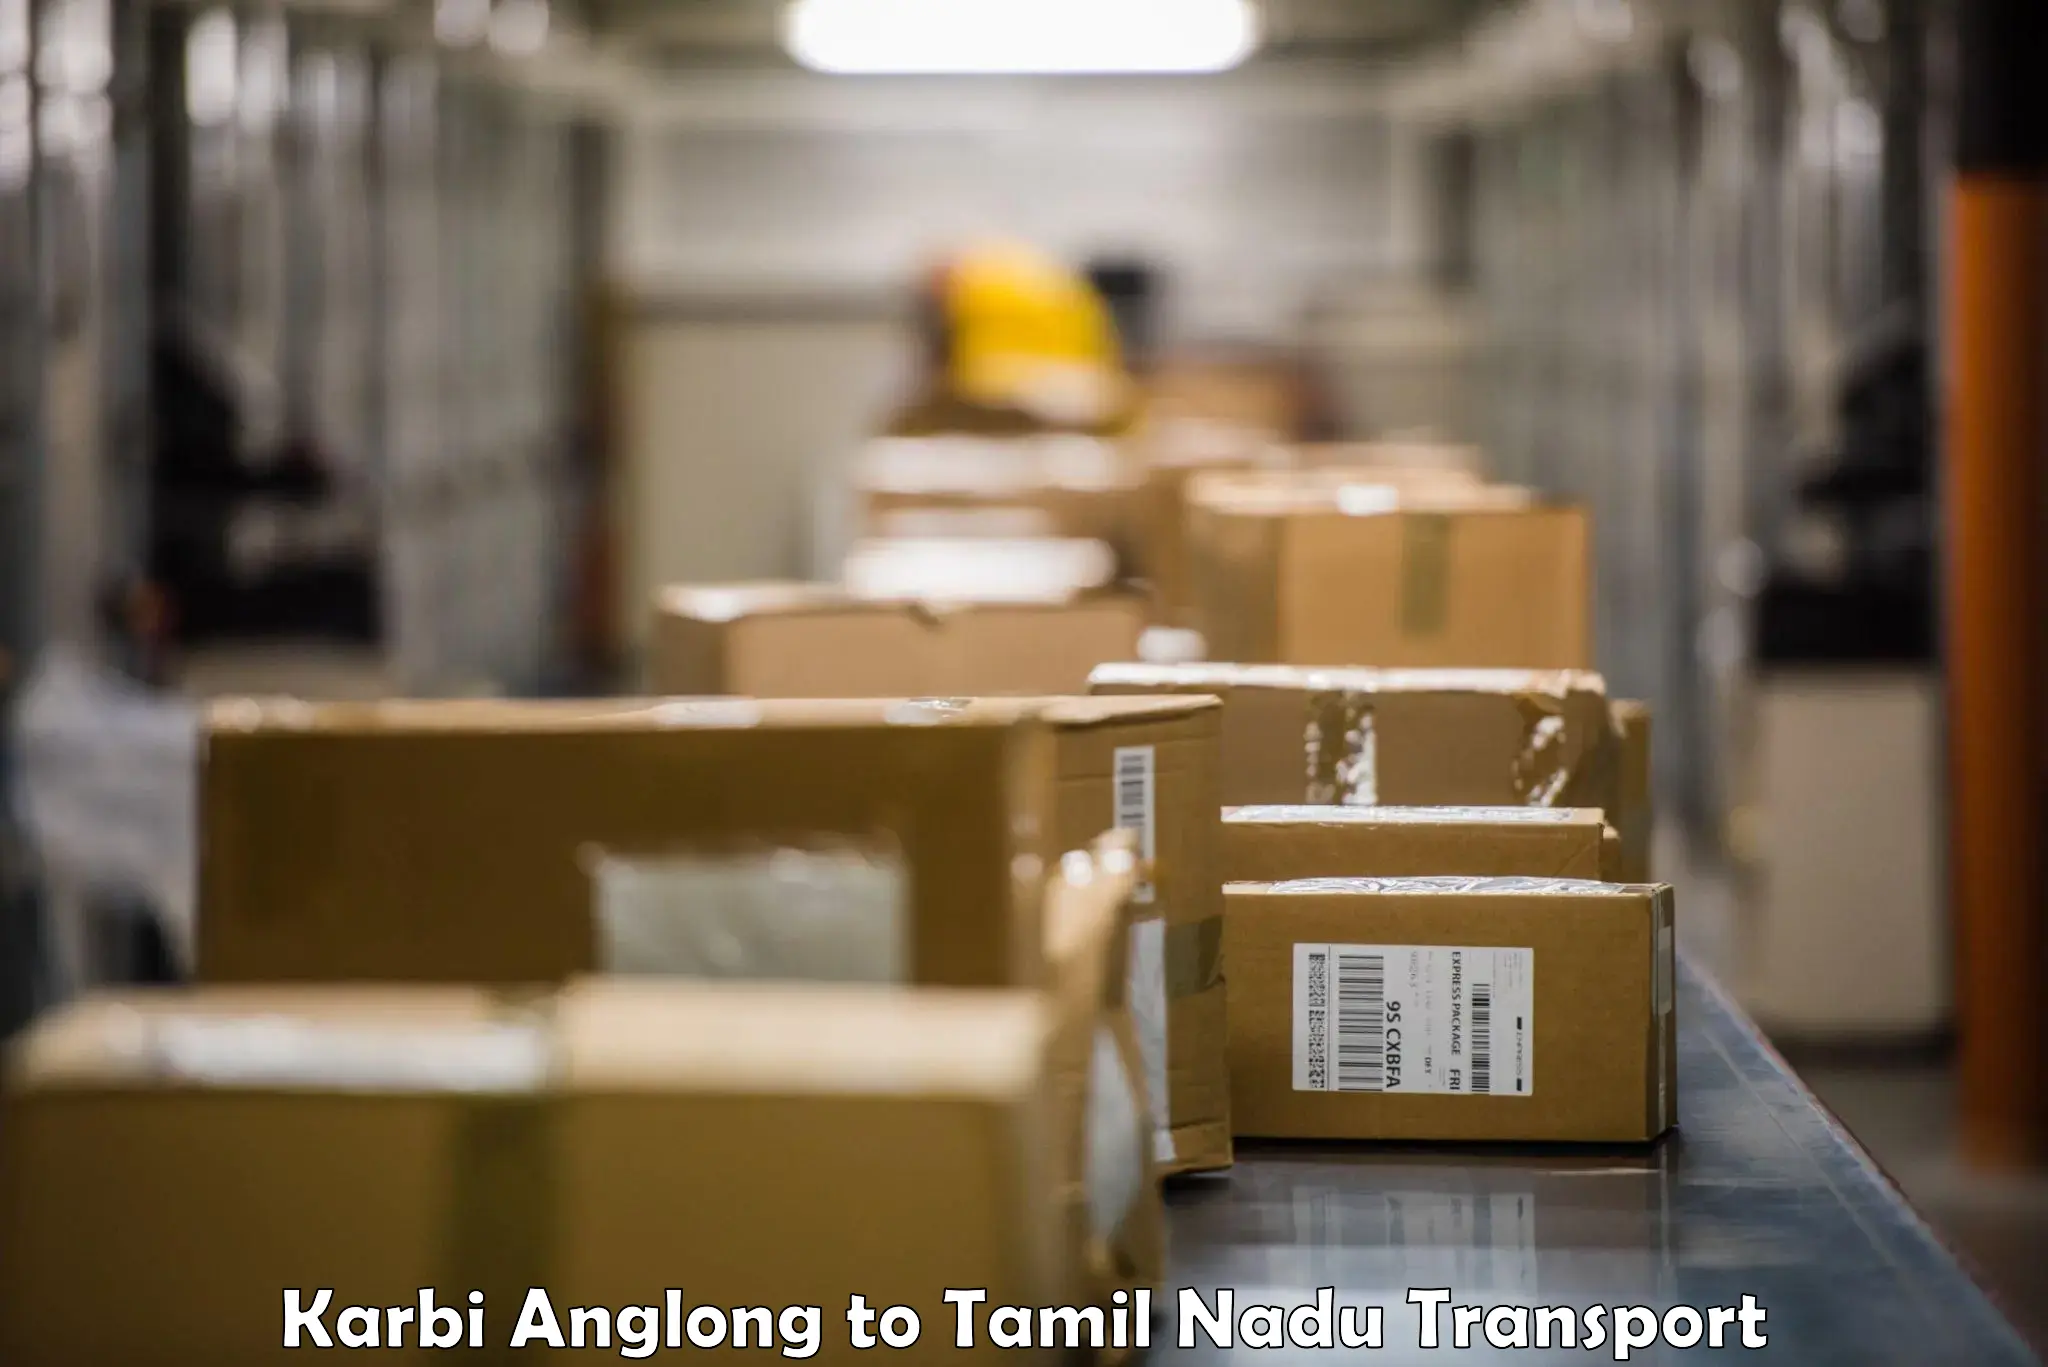 Lorry transport service Karbi Anglong to Palladam